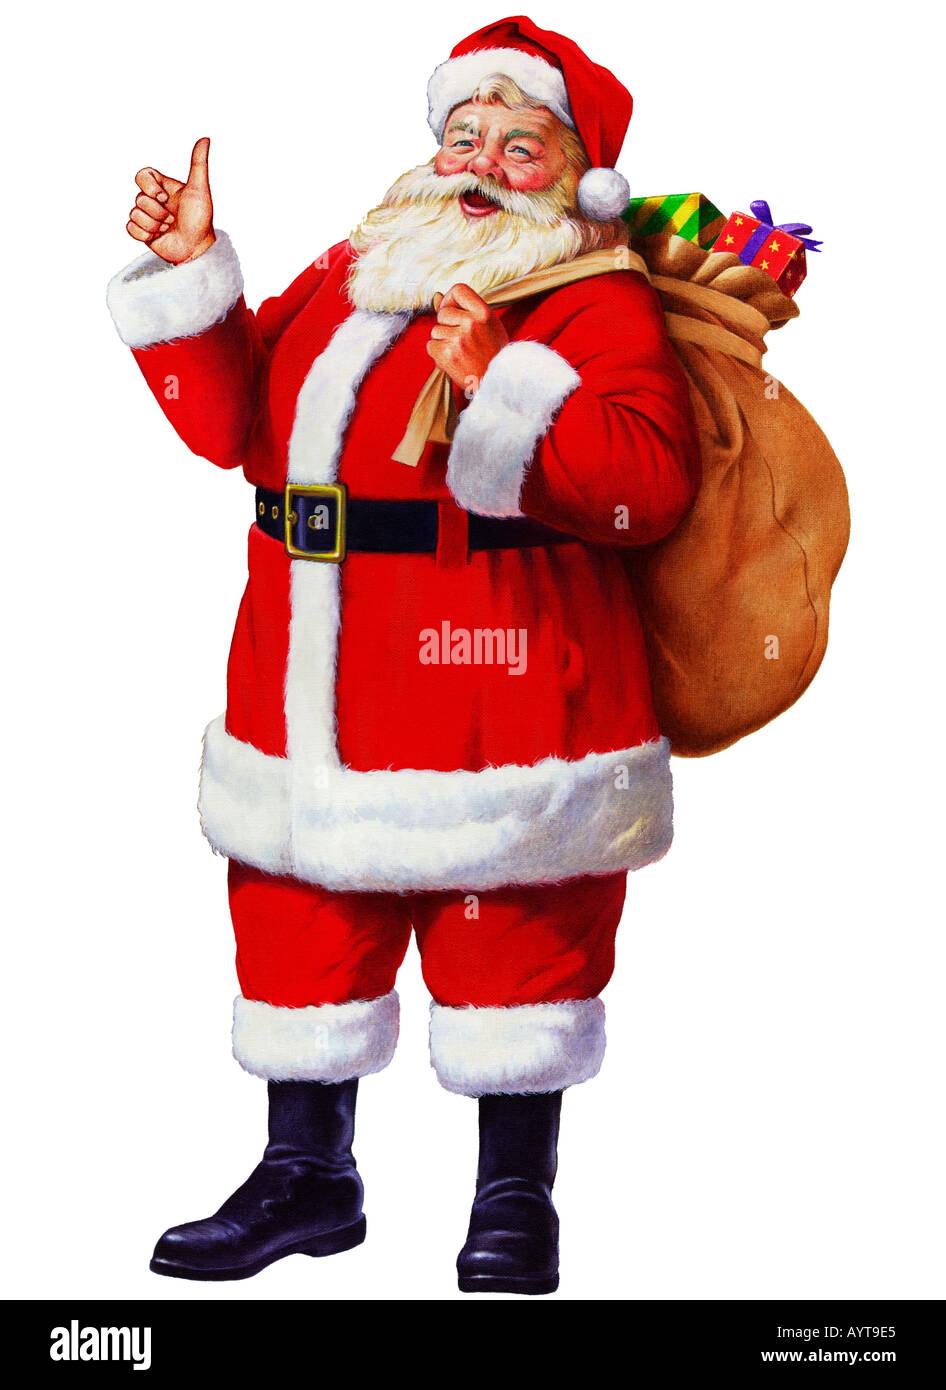 Illustration of Santa Claus Photo Stock - Alamy